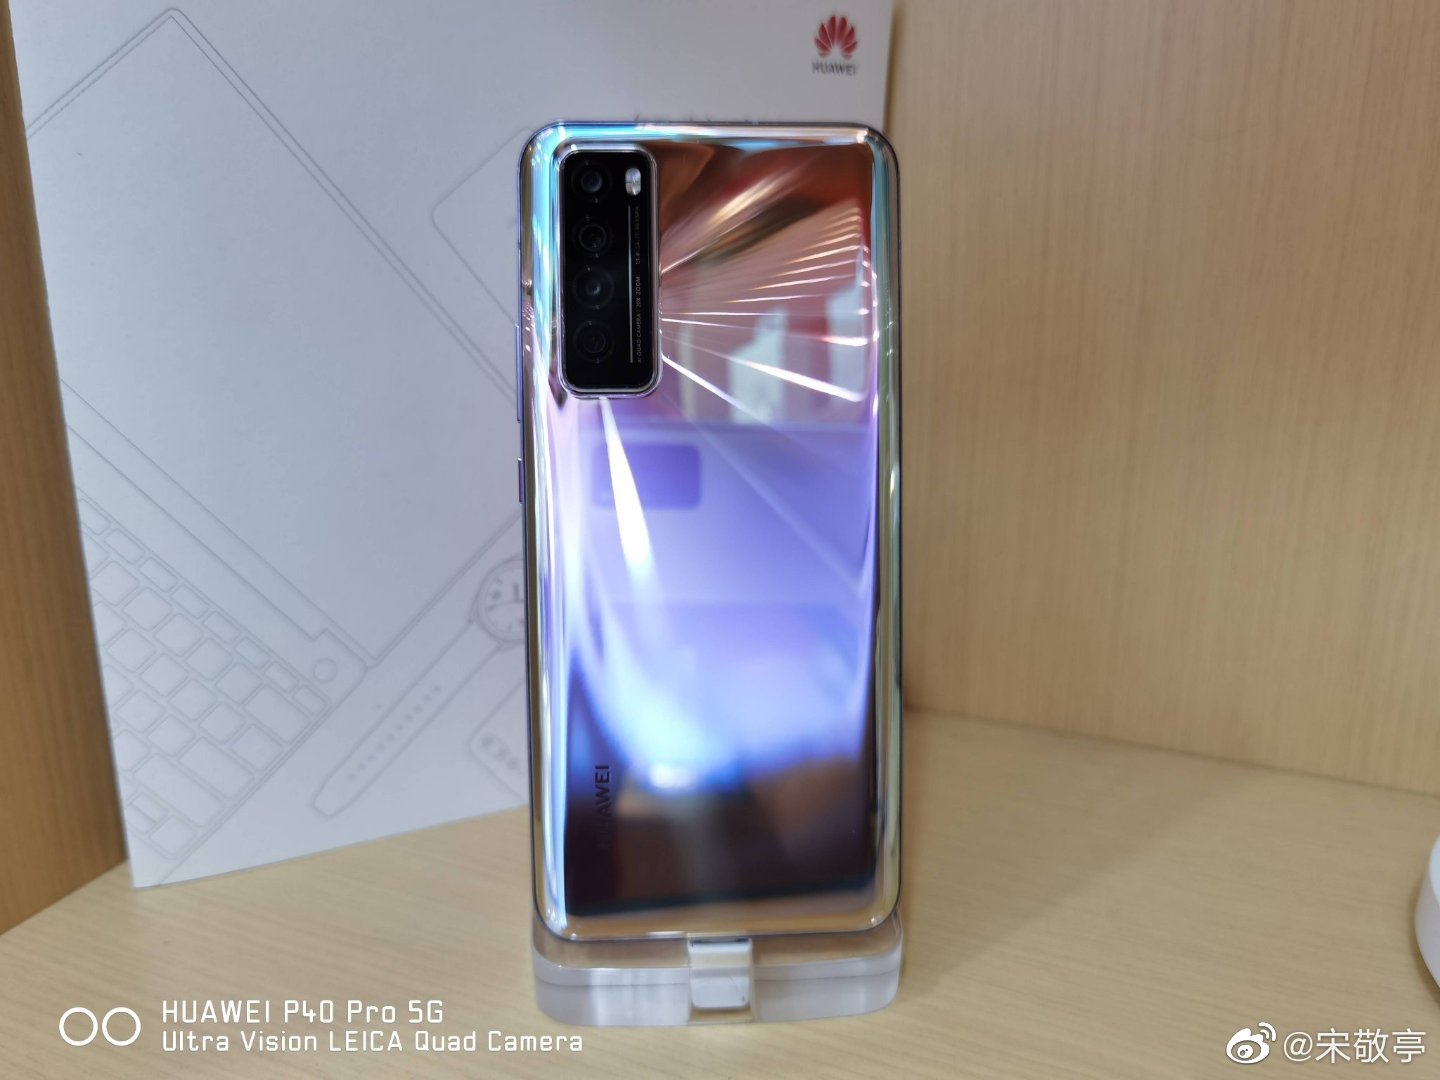 Rechtzetten schedel Commissie Huawei Nova 7 Leaks in a Mirror Grey Finish (again) - Gizmochina